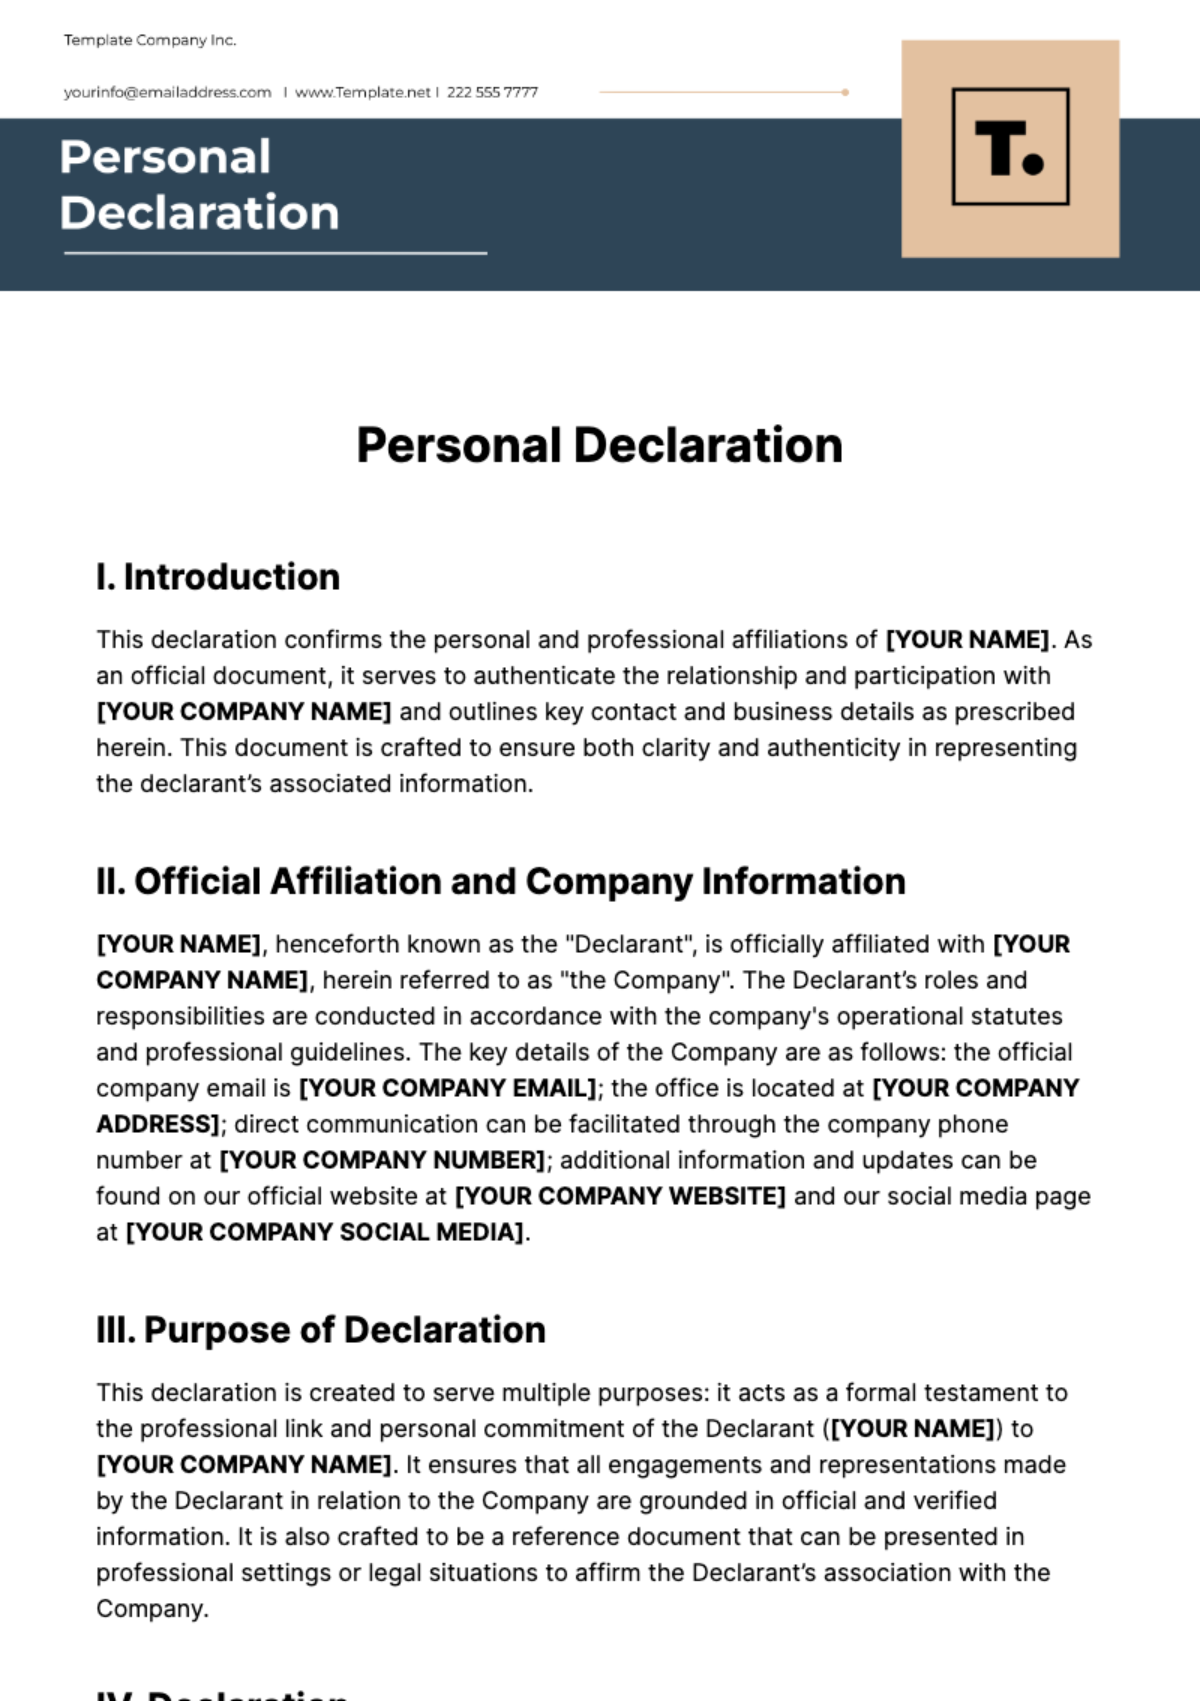 Personal Declaration Template